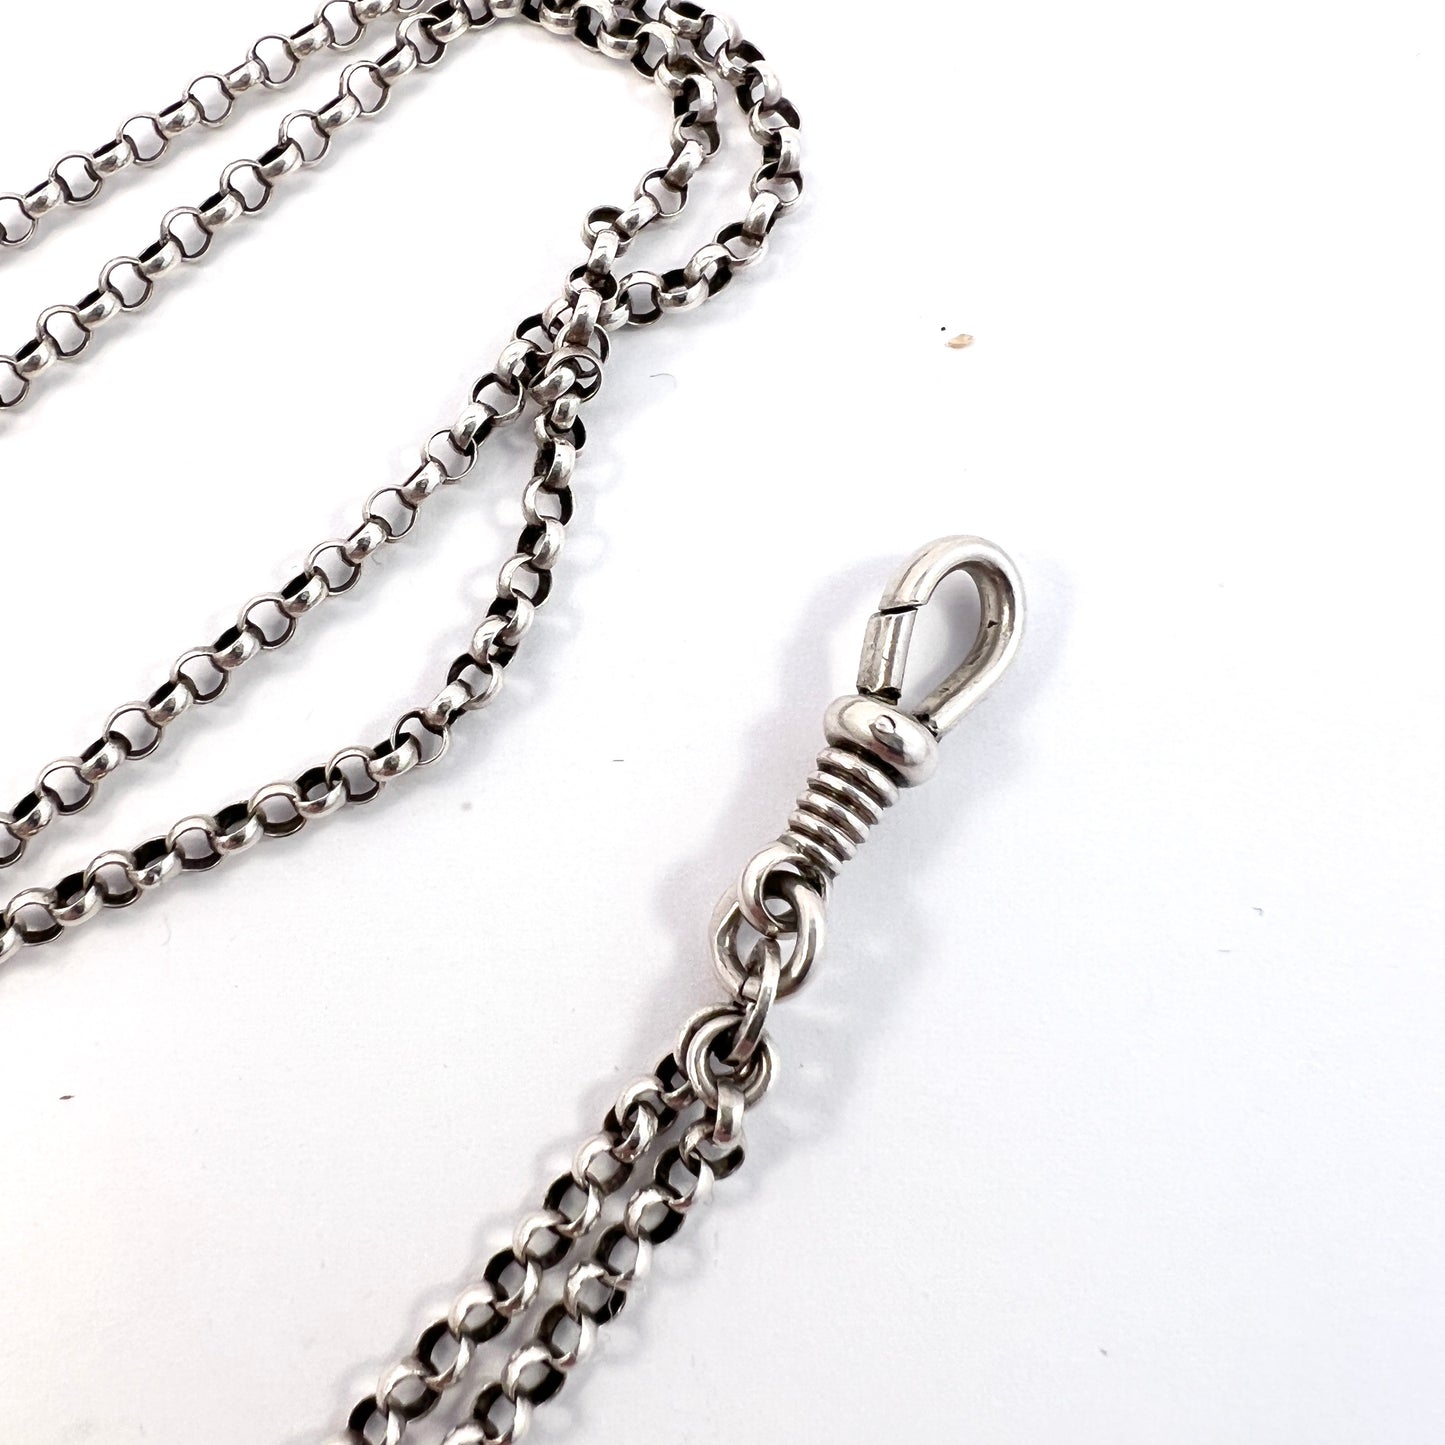 Antique 830 Silver 57" Long Guard Chain Necklace w Dog Clip.